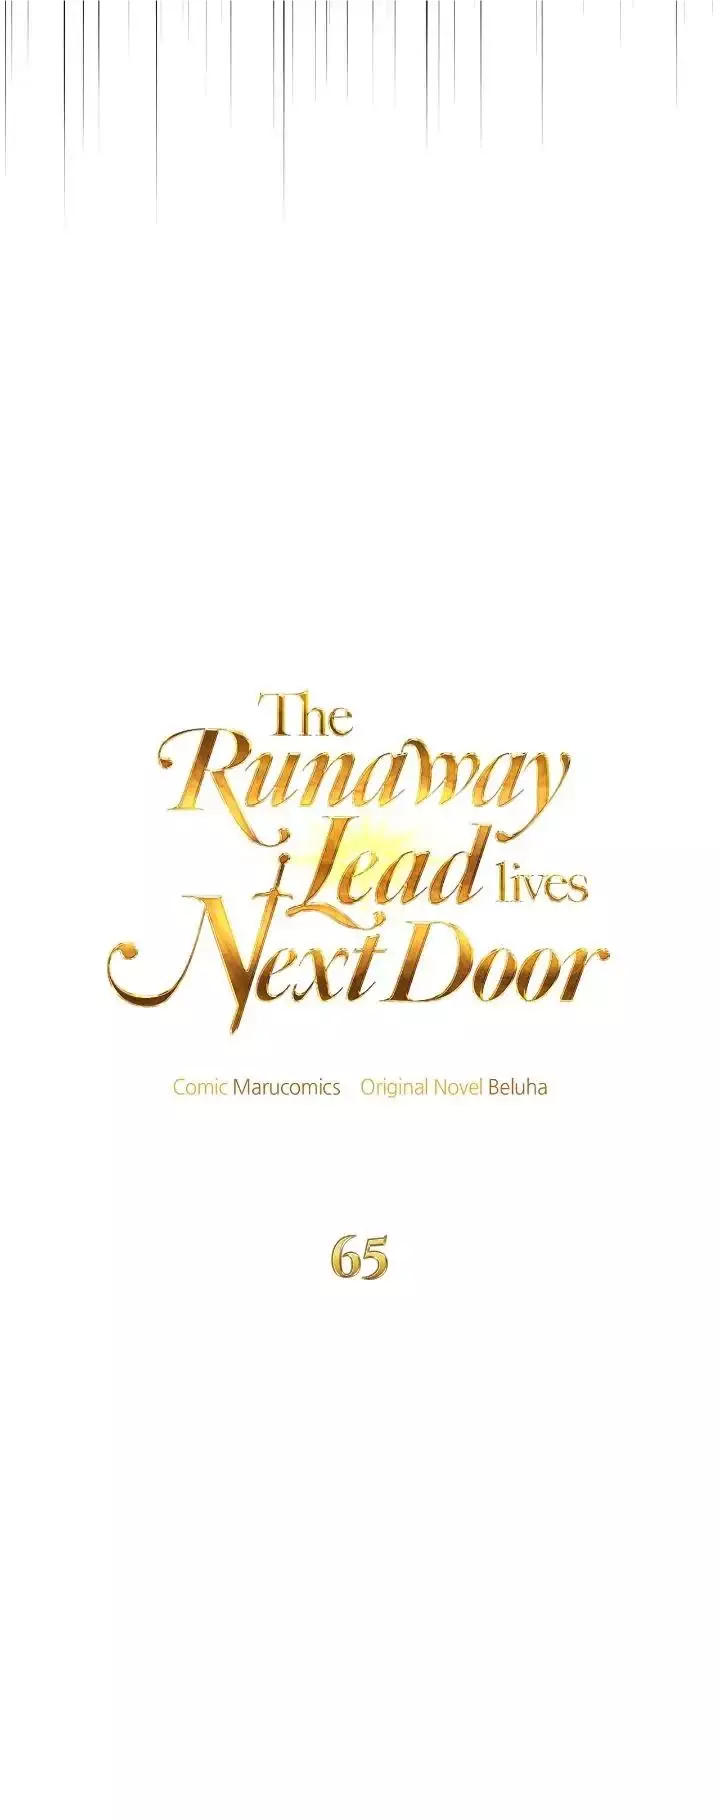 The Runaway Lead Lives Next Door - 65 page 11-ee5aca41